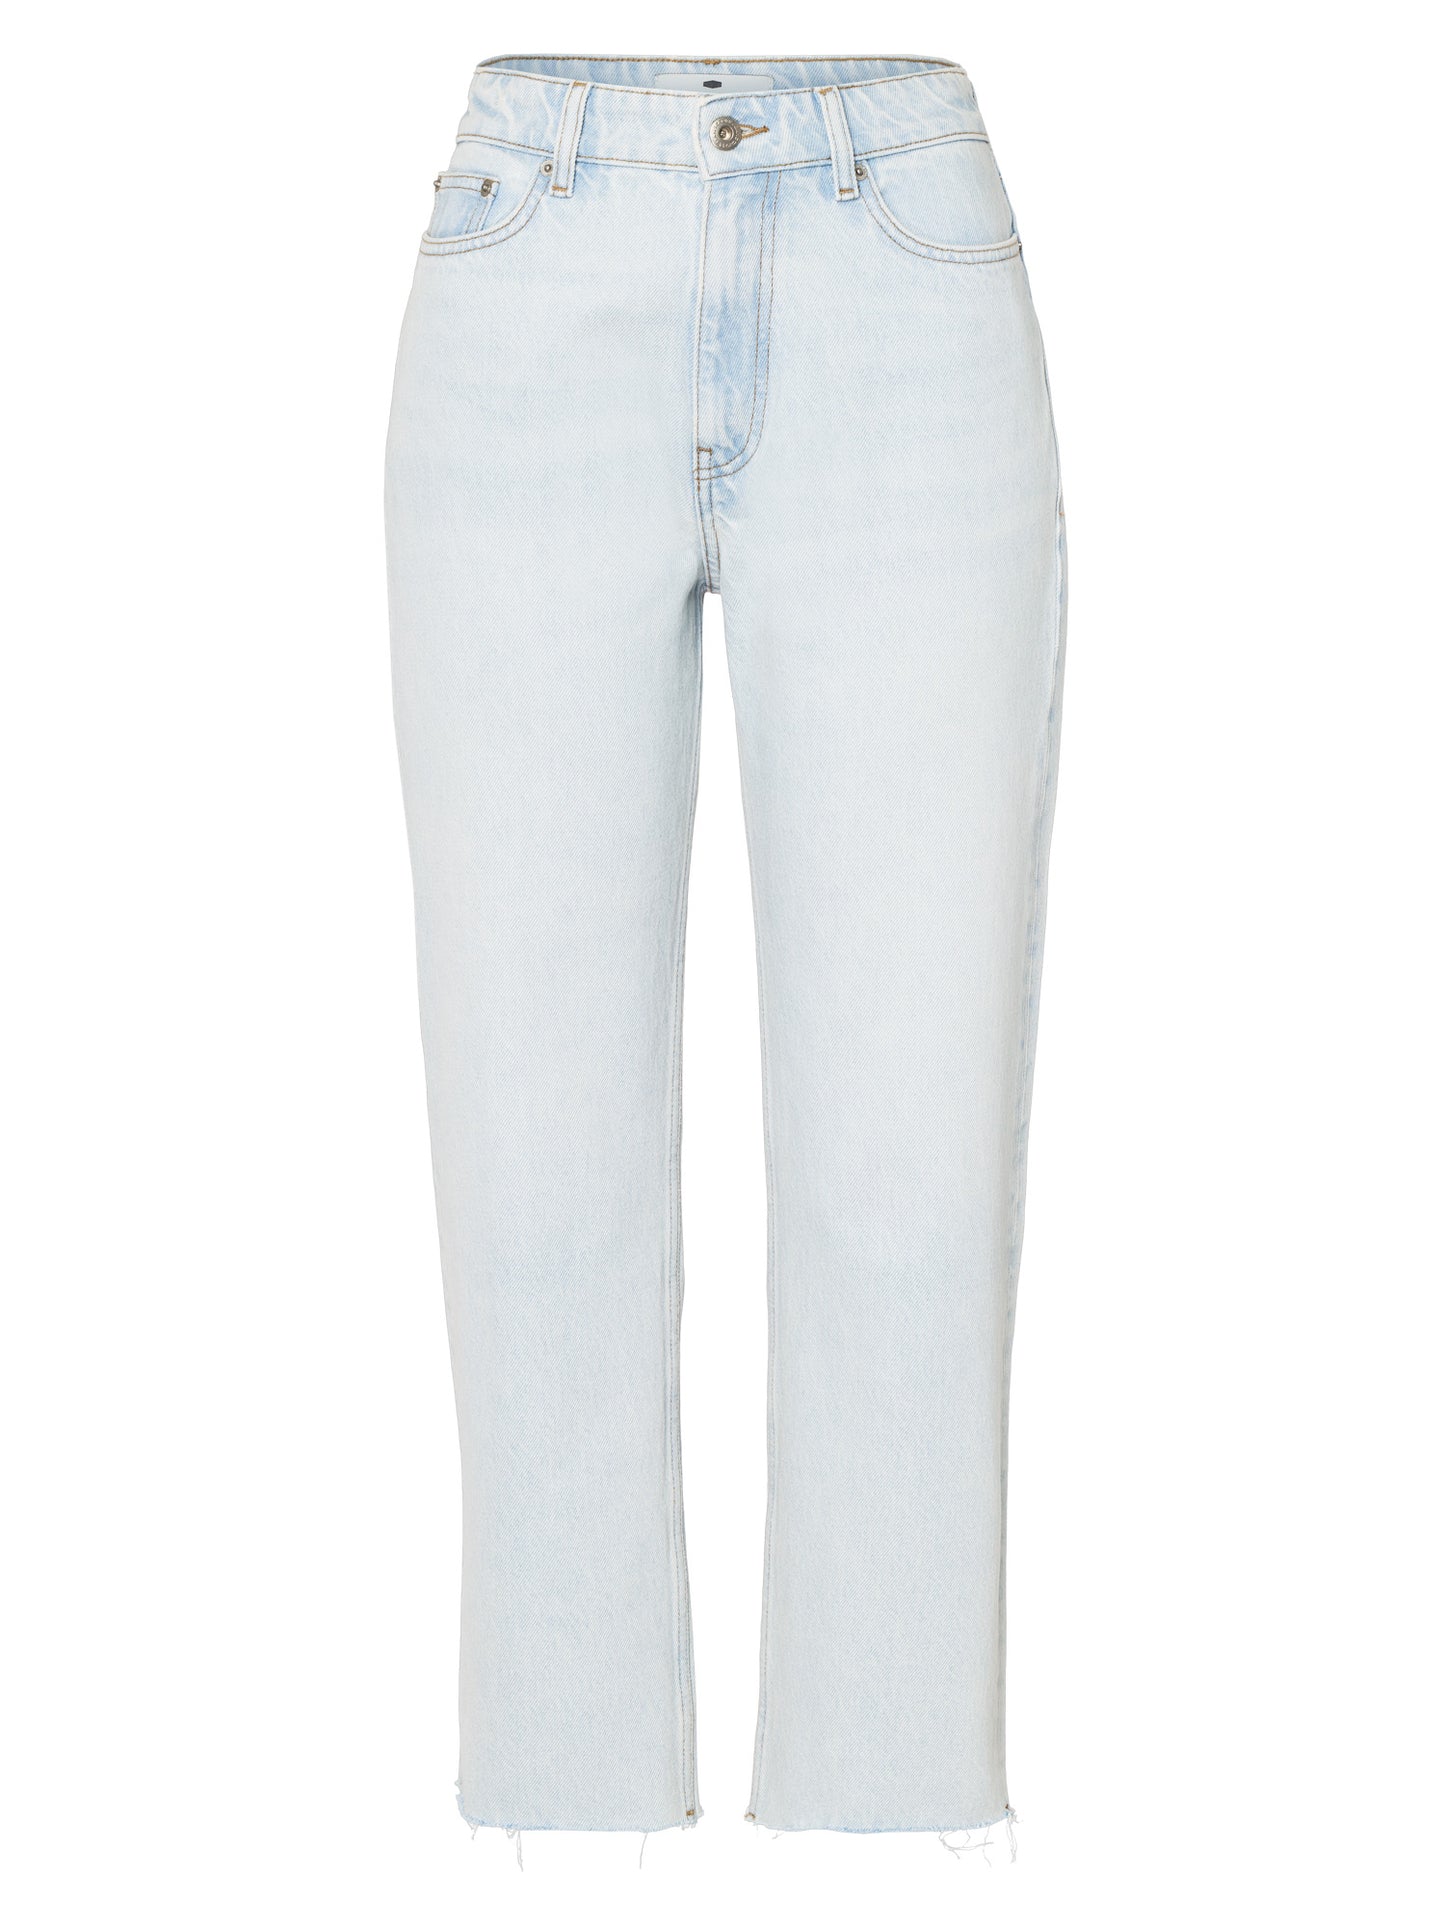 Karlie Damen Jeans Straight Fit High Waist Cropped hellblau